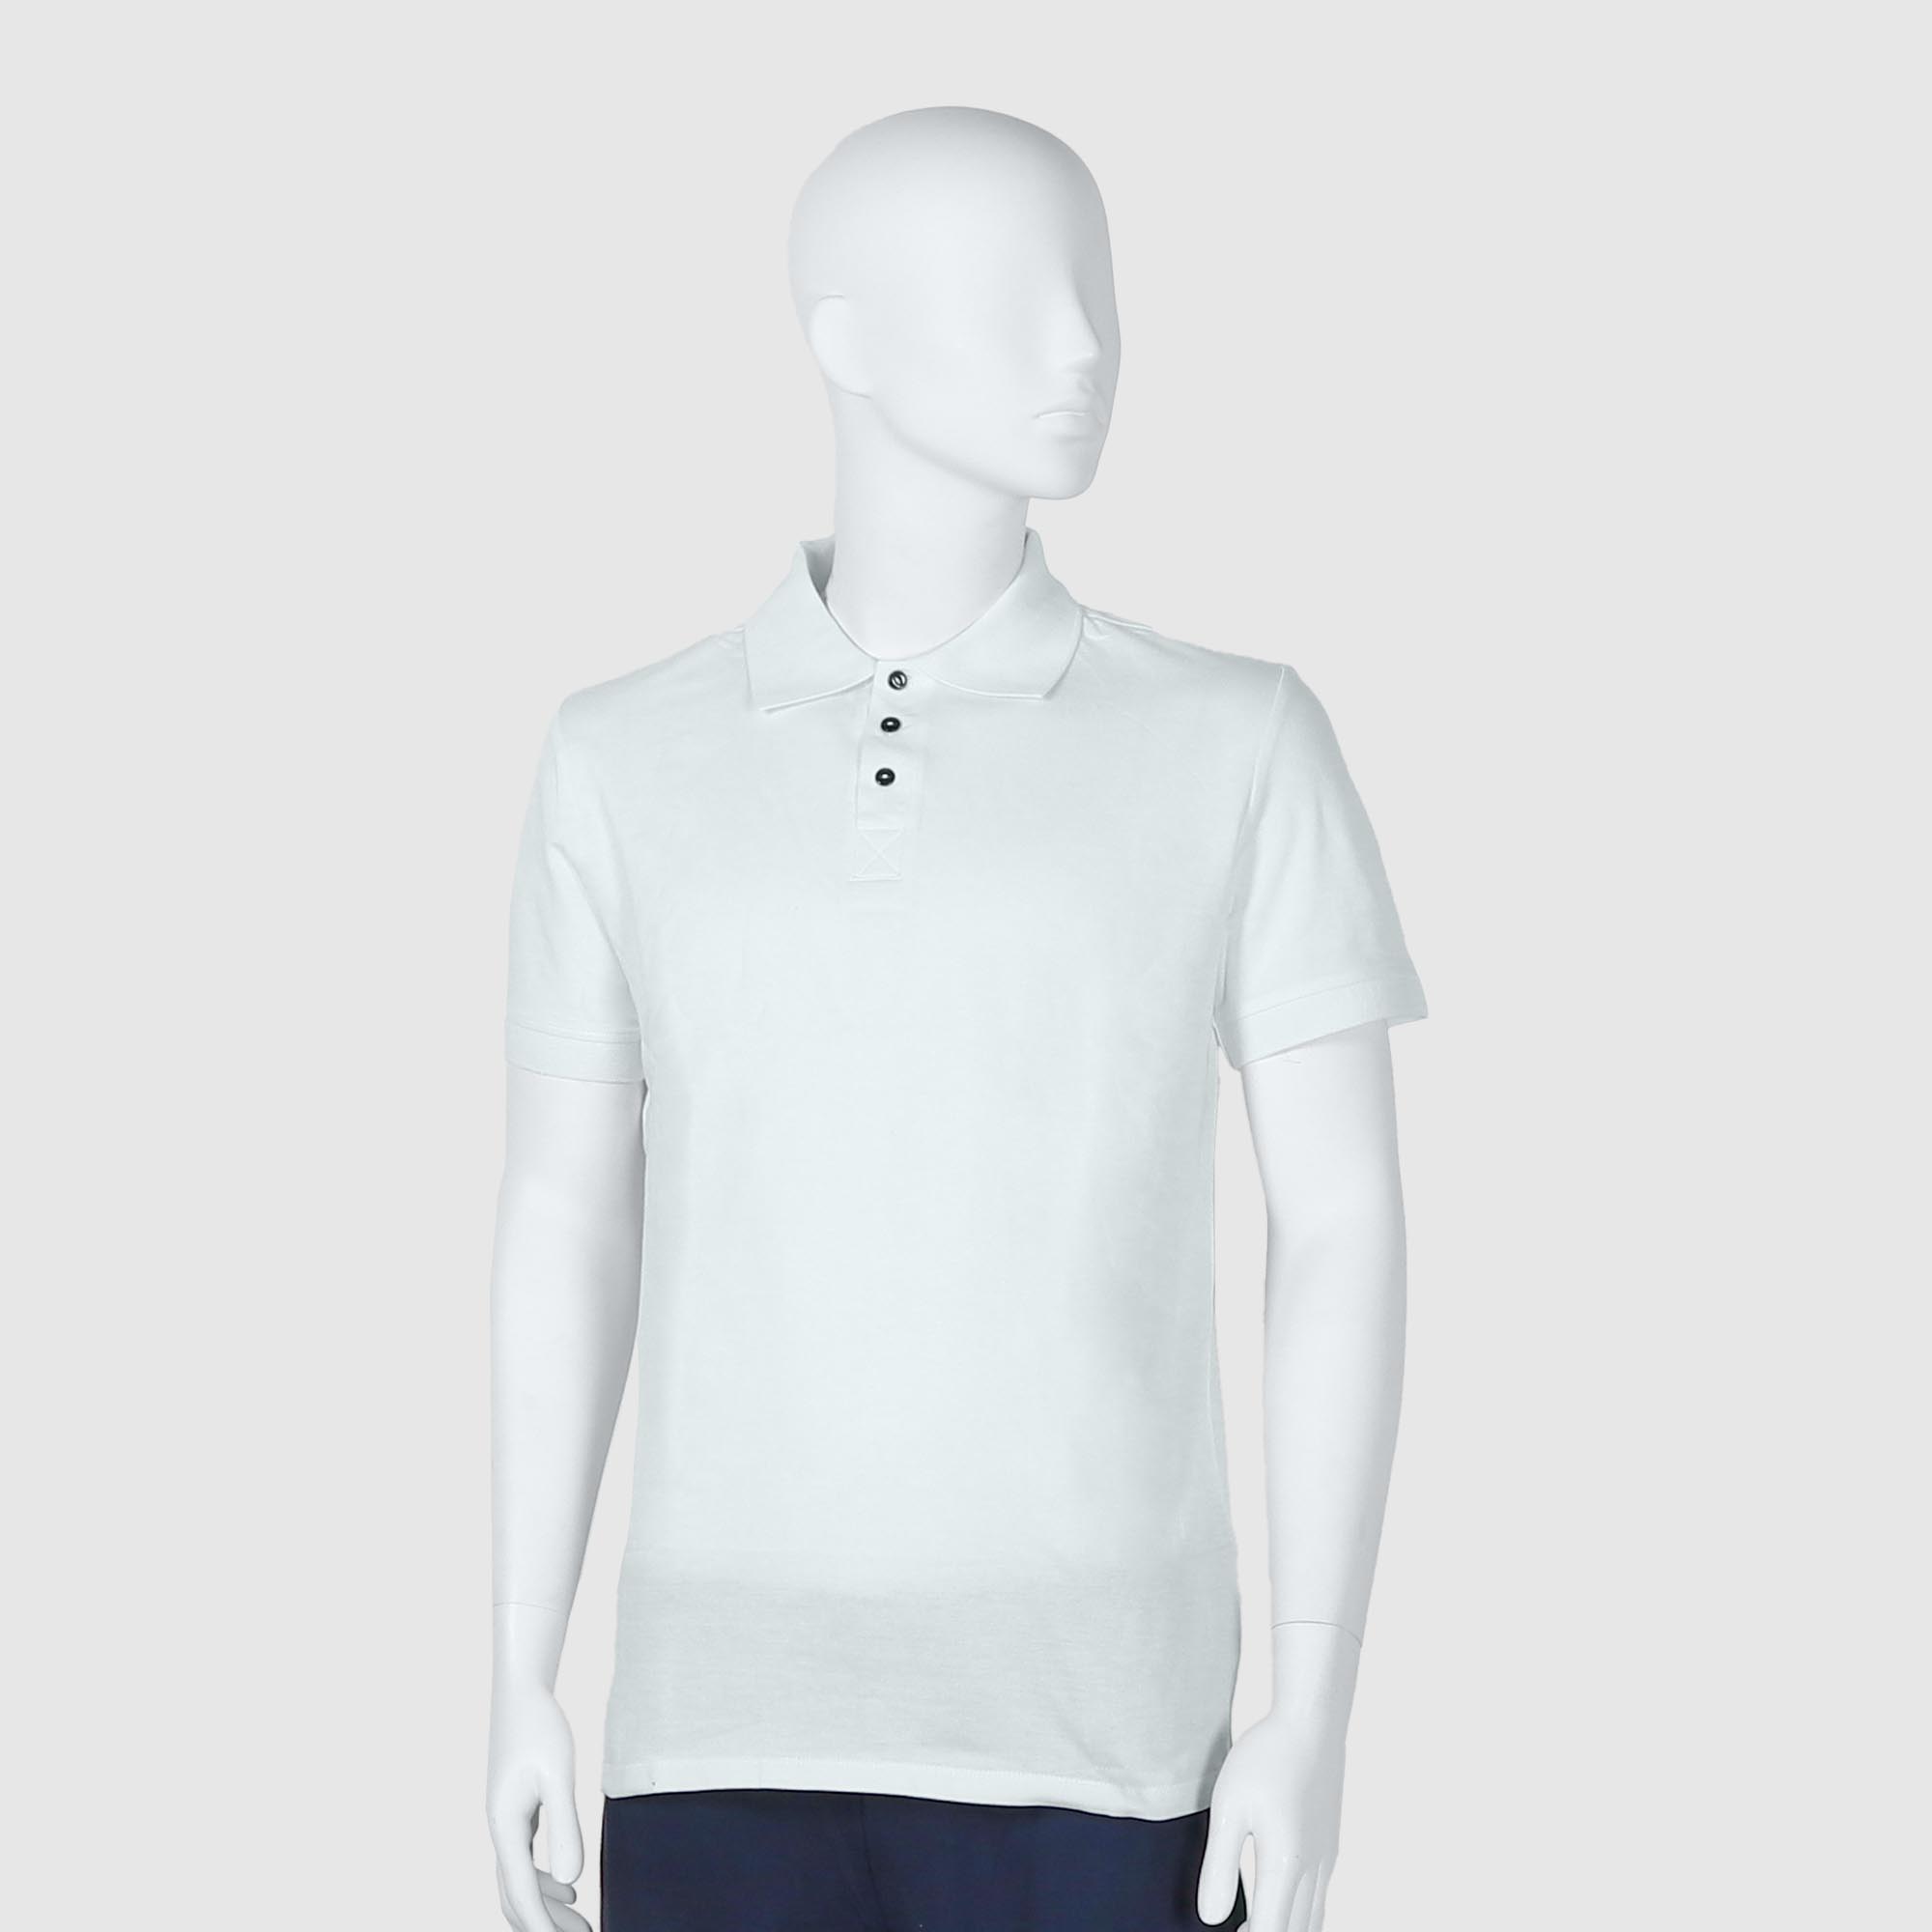 Мужская футболка-поло Diva Teks белая (DTD-07), цвет белый, размер 48-50